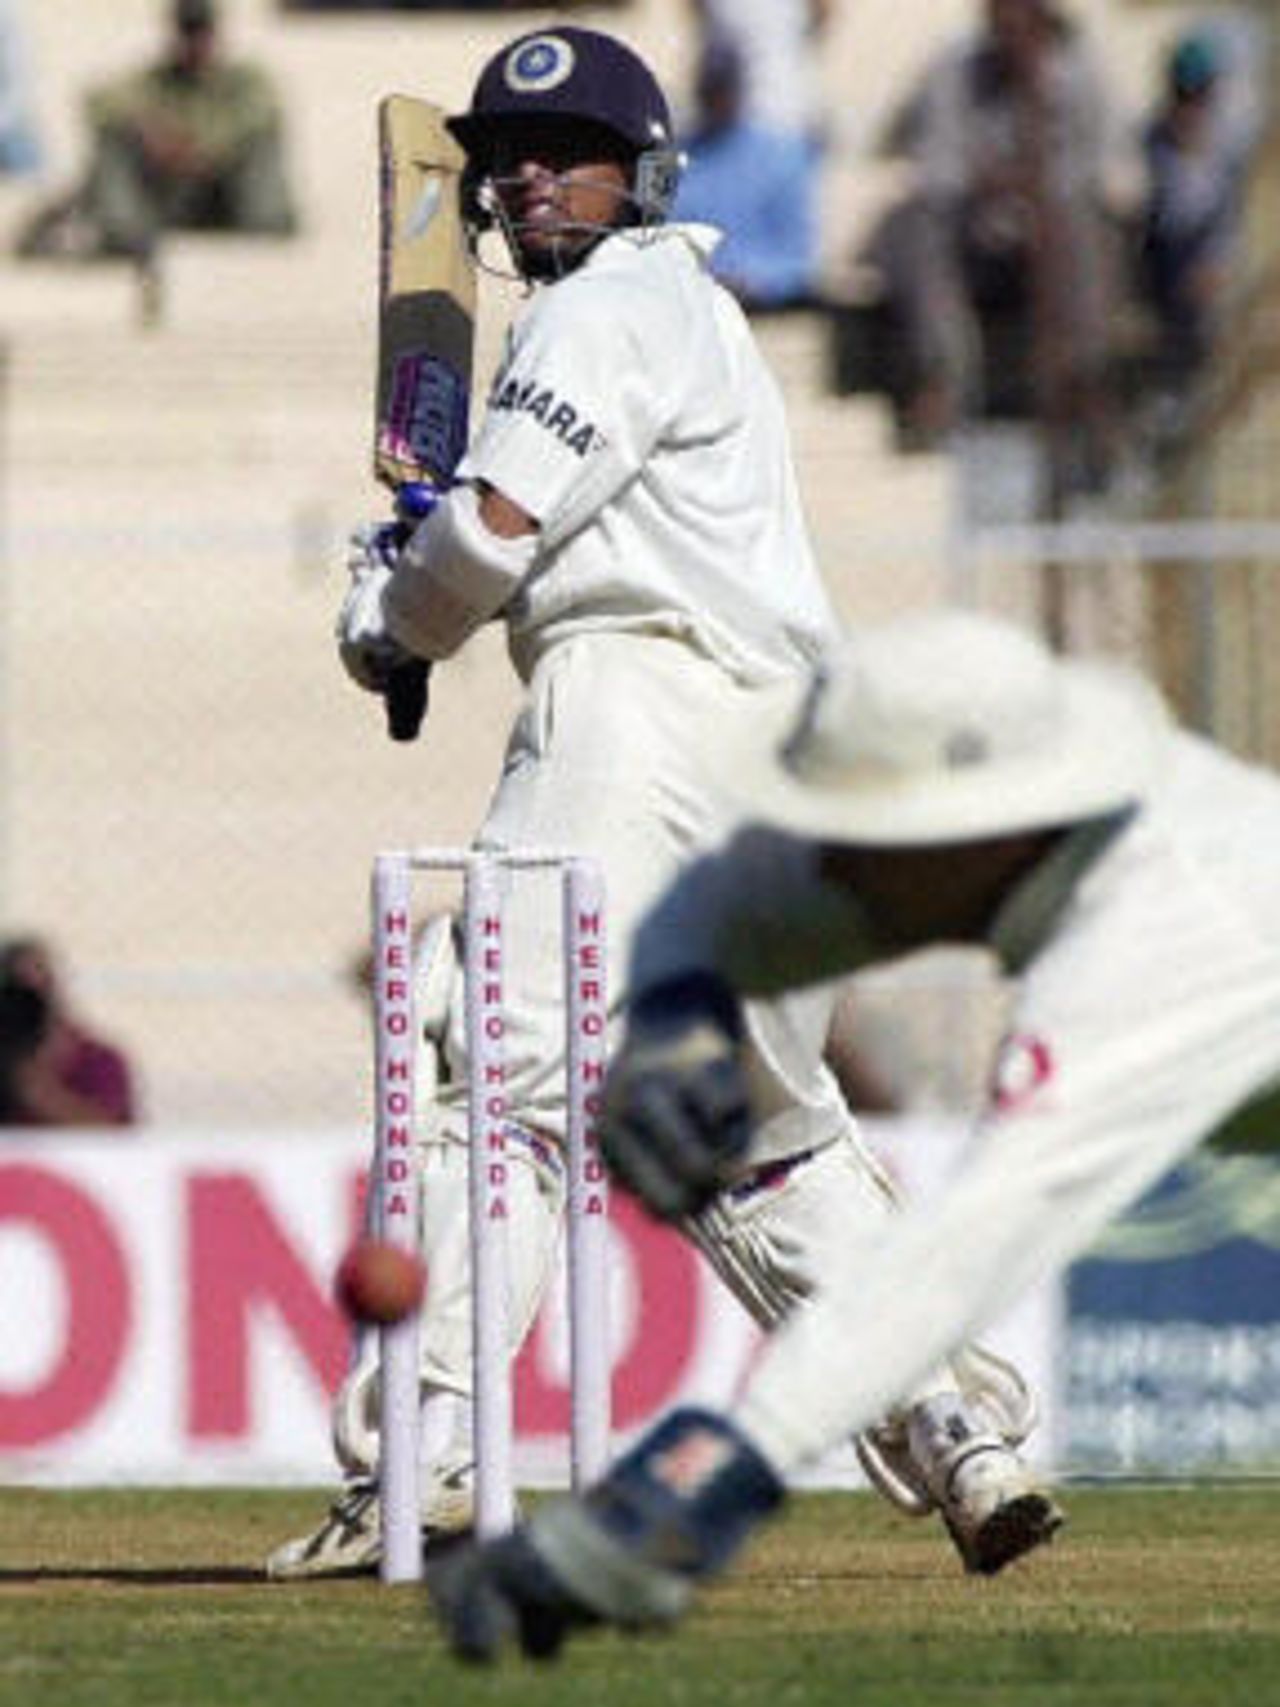 India v England, 2nd Test match , Ahmedabad, 11-15 December 2001